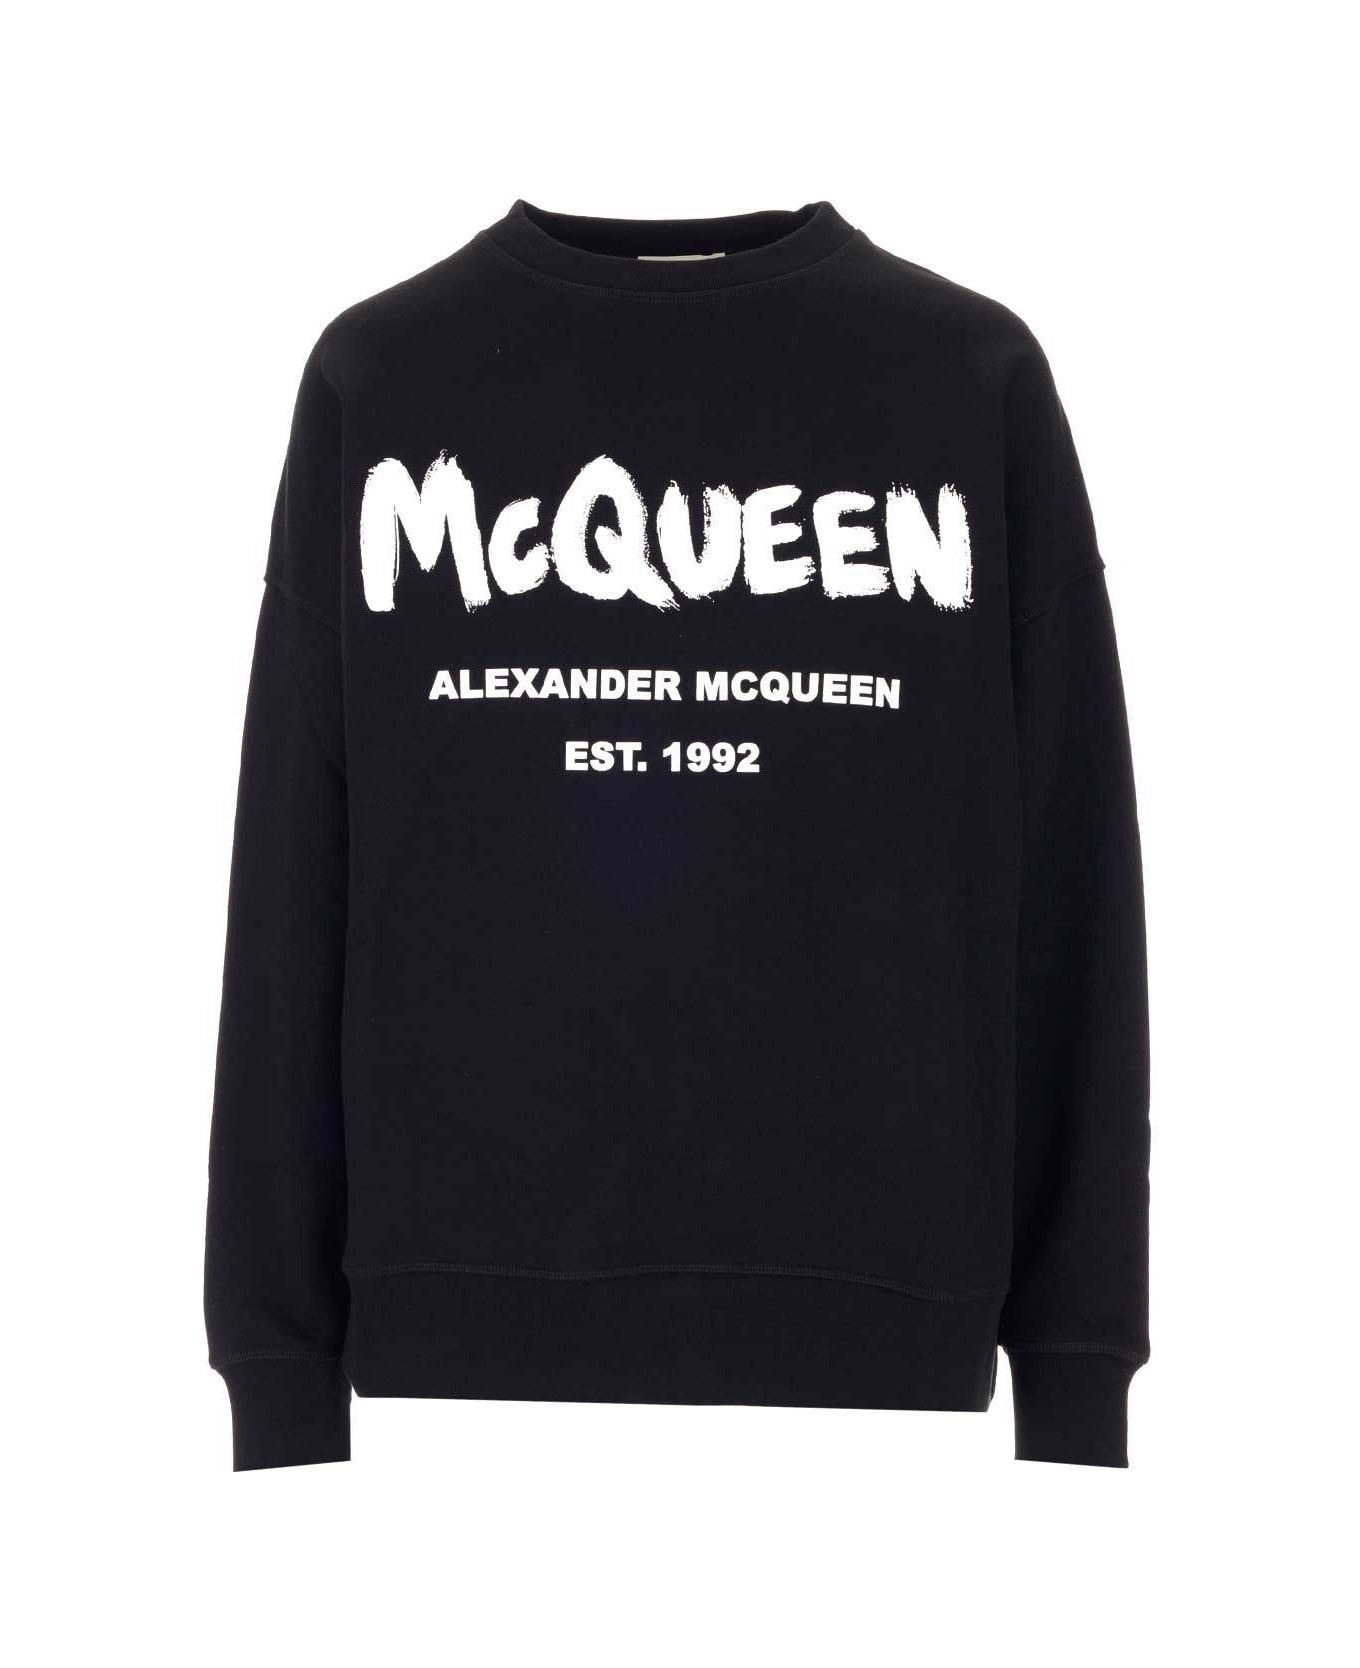 Alexander McQueen Graffiti Printed Sweatshirt - black